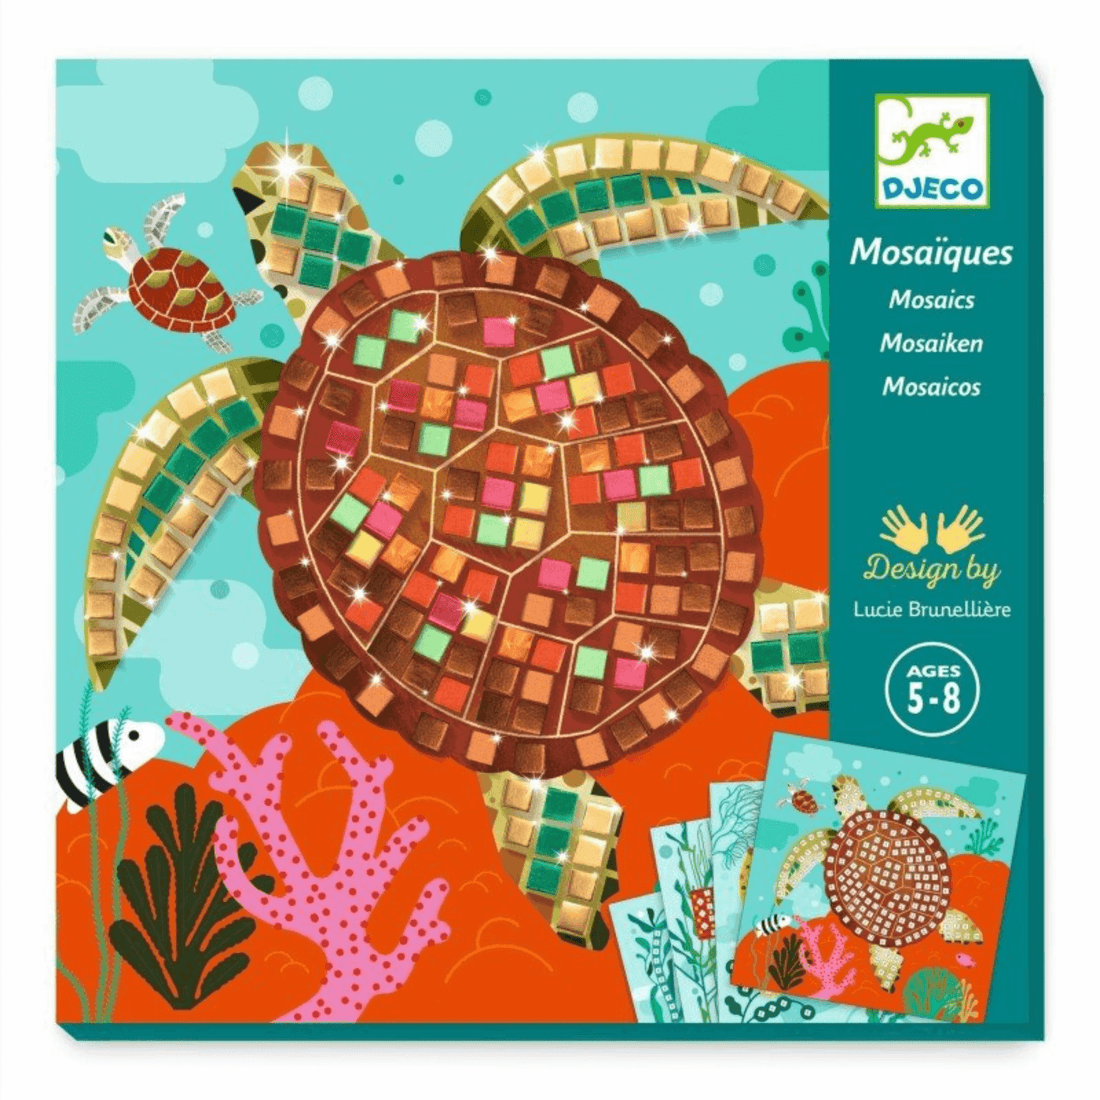 Mosaic - Animals of the Caribbean Sea